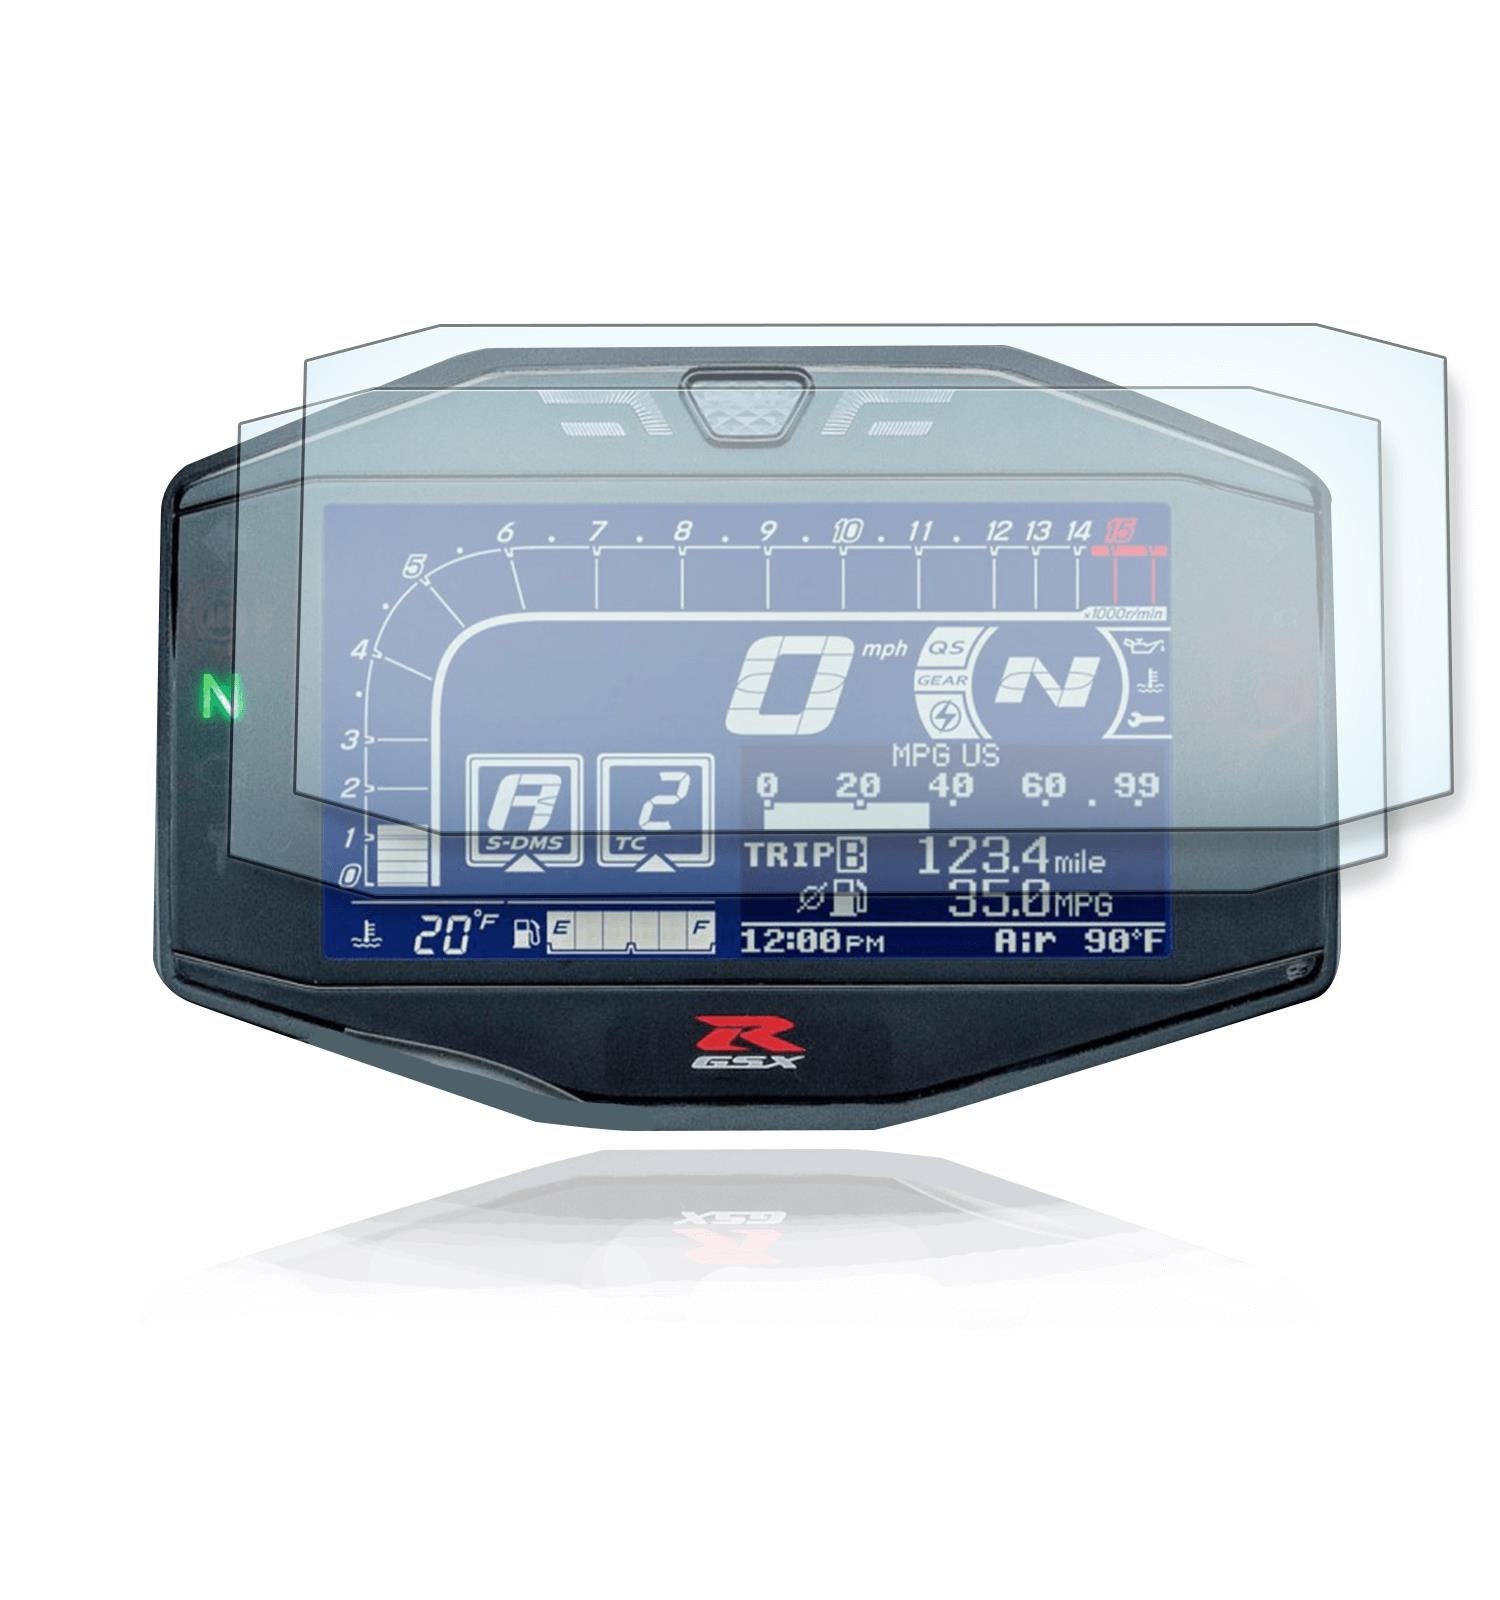 Kawasaki Z900RS instrument cluster dashboard speedo screen protector  protection film kit.